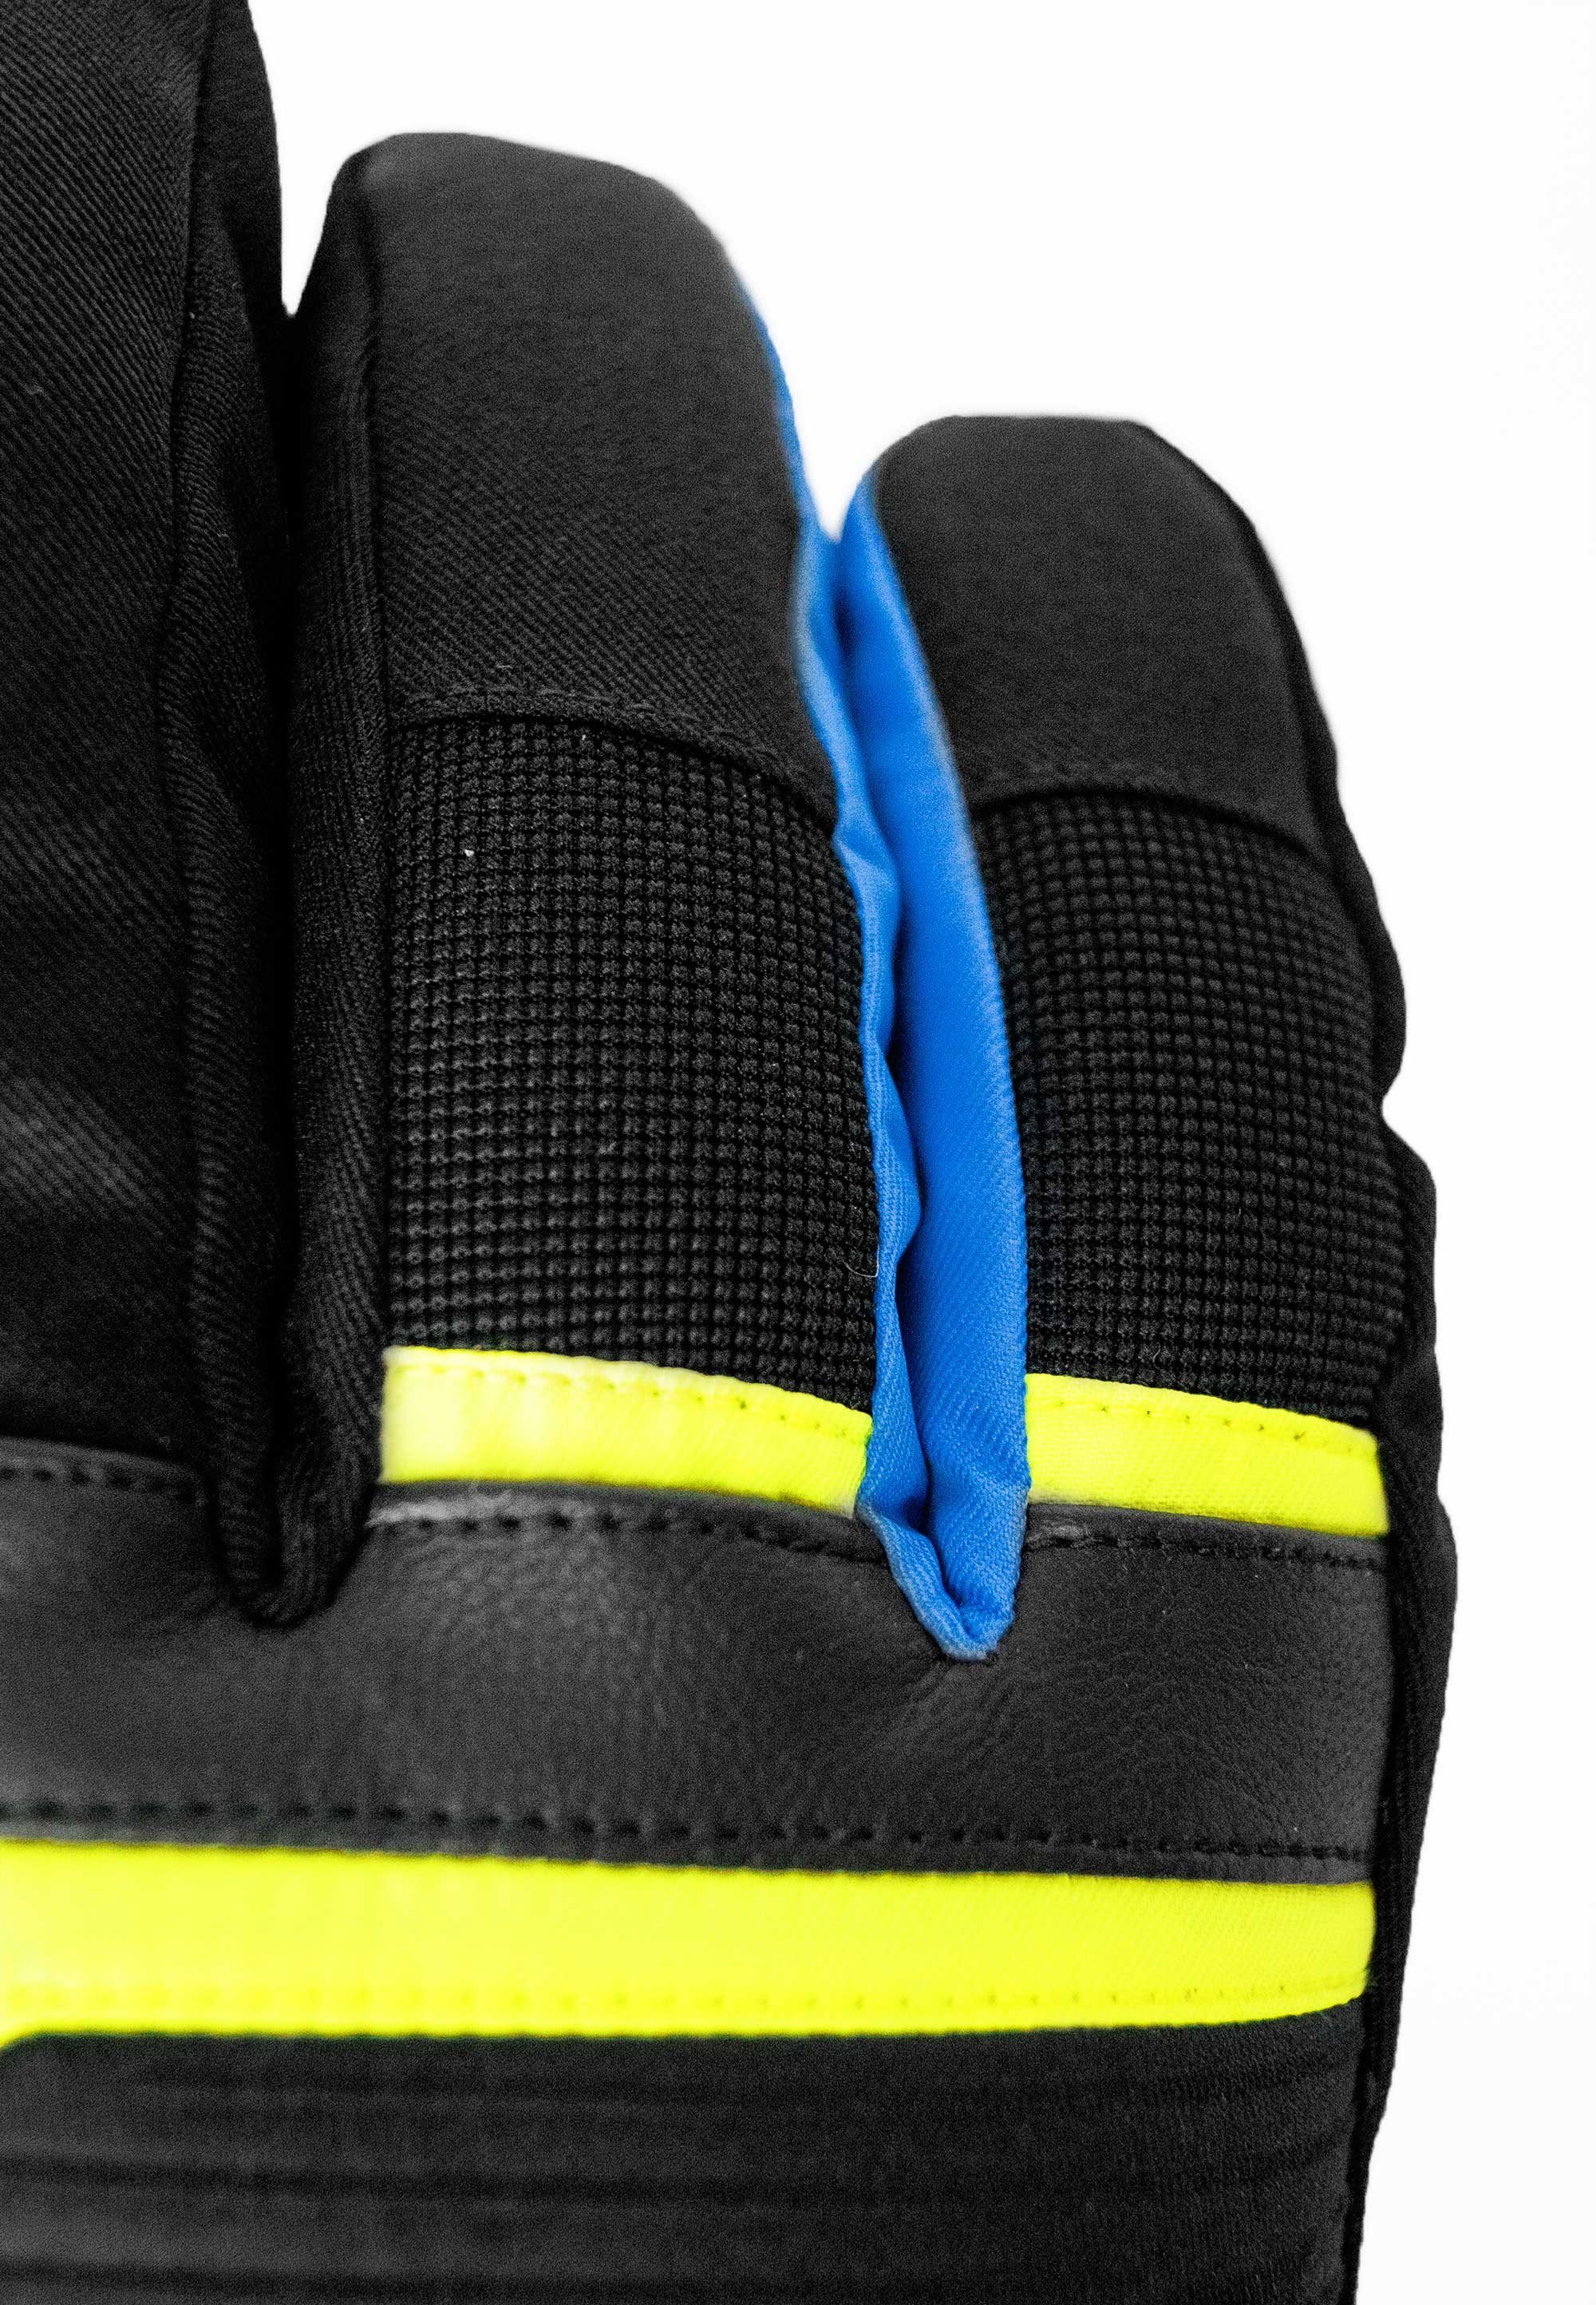 Reusch Skihandschuhe Venom R-TEX® XT aus wasserdichtem Material atmungsaktivem und schwarz-blau